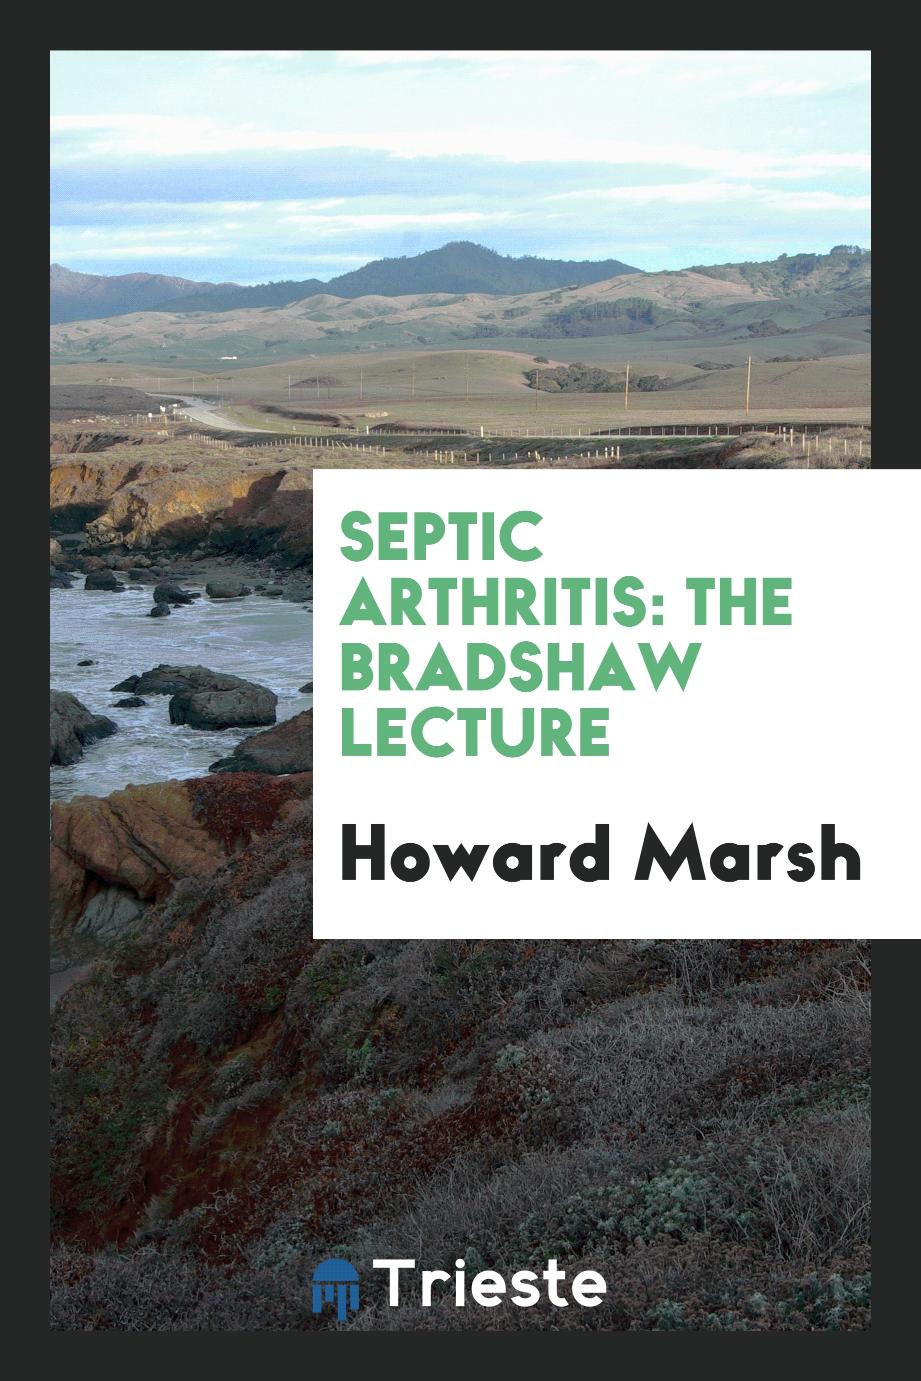 Septic arthritis: The Bradshaw Lecture